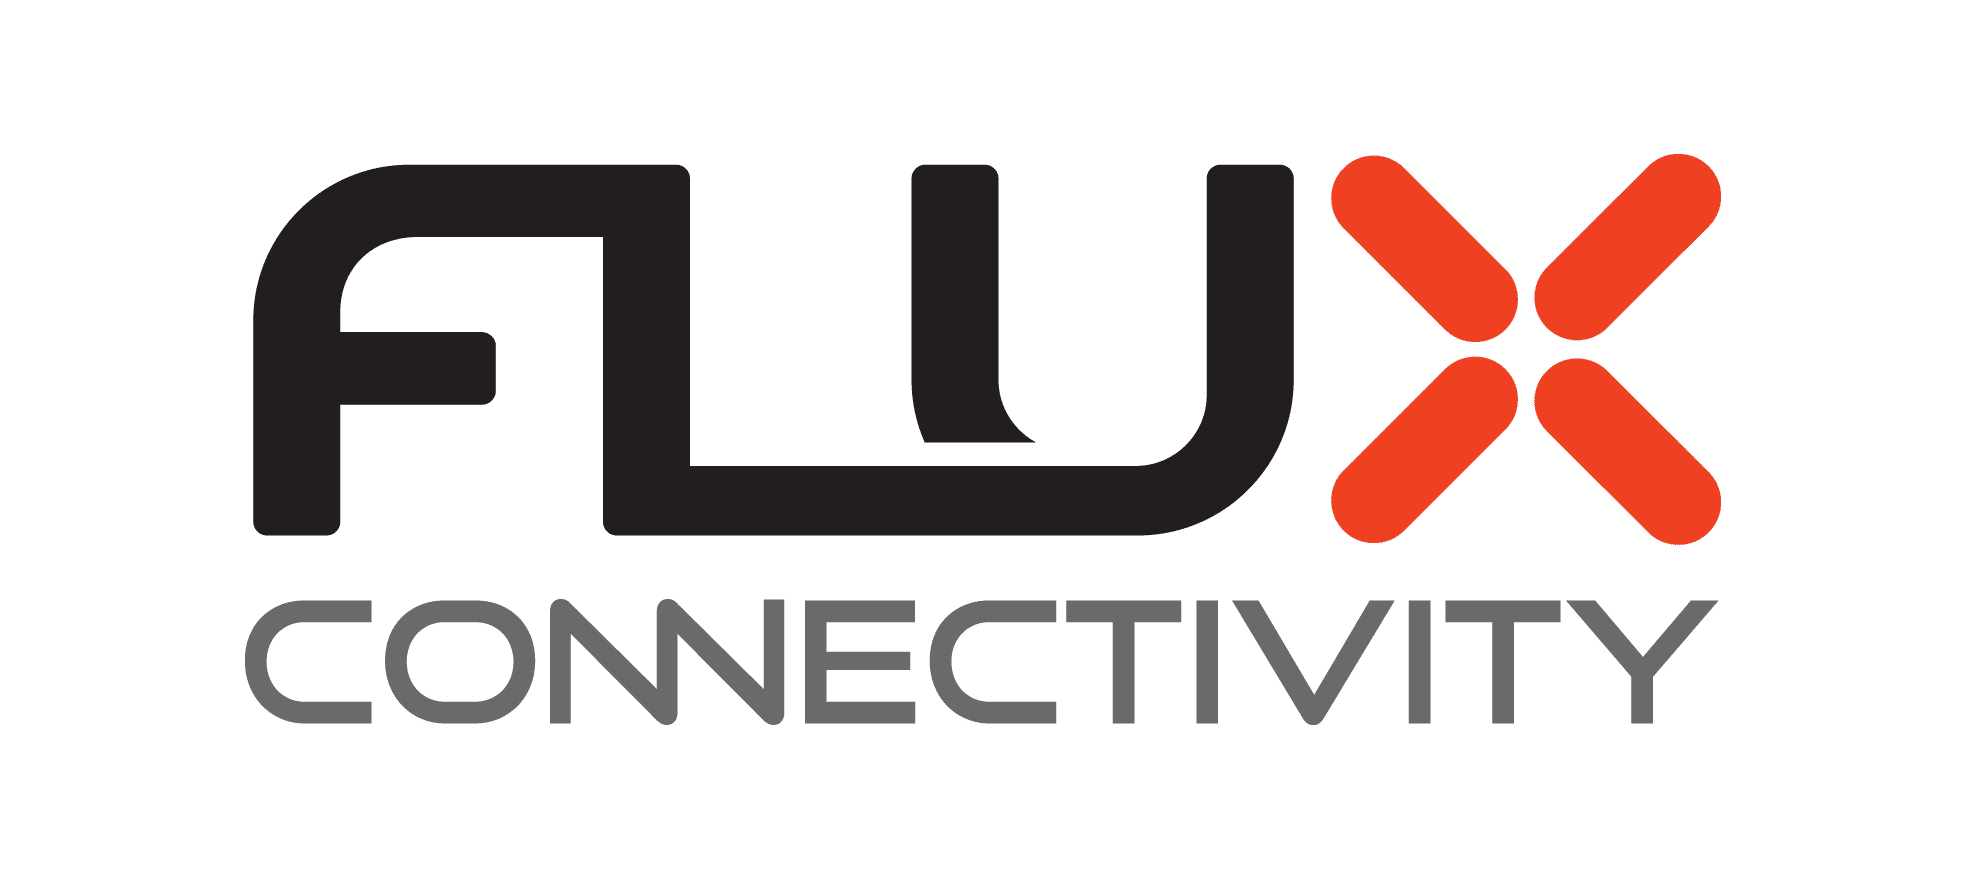 Flux Logo - Cable Assemblies | Flux Connectivity | Enabling The Connected World™